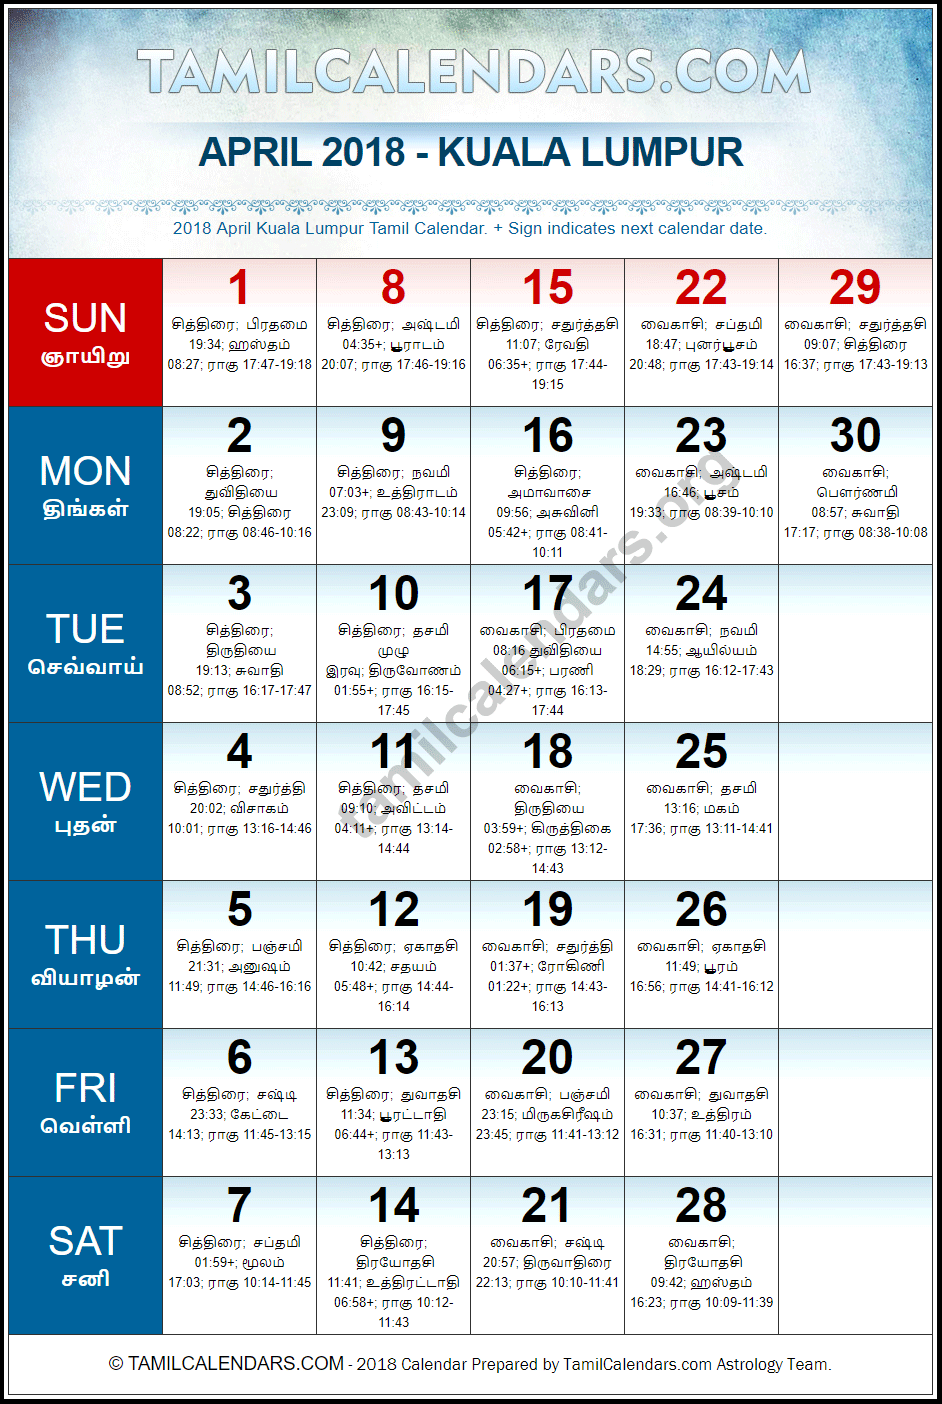 April 2018 Tamil Calendar for Malaysia (Kuala Lumpur)